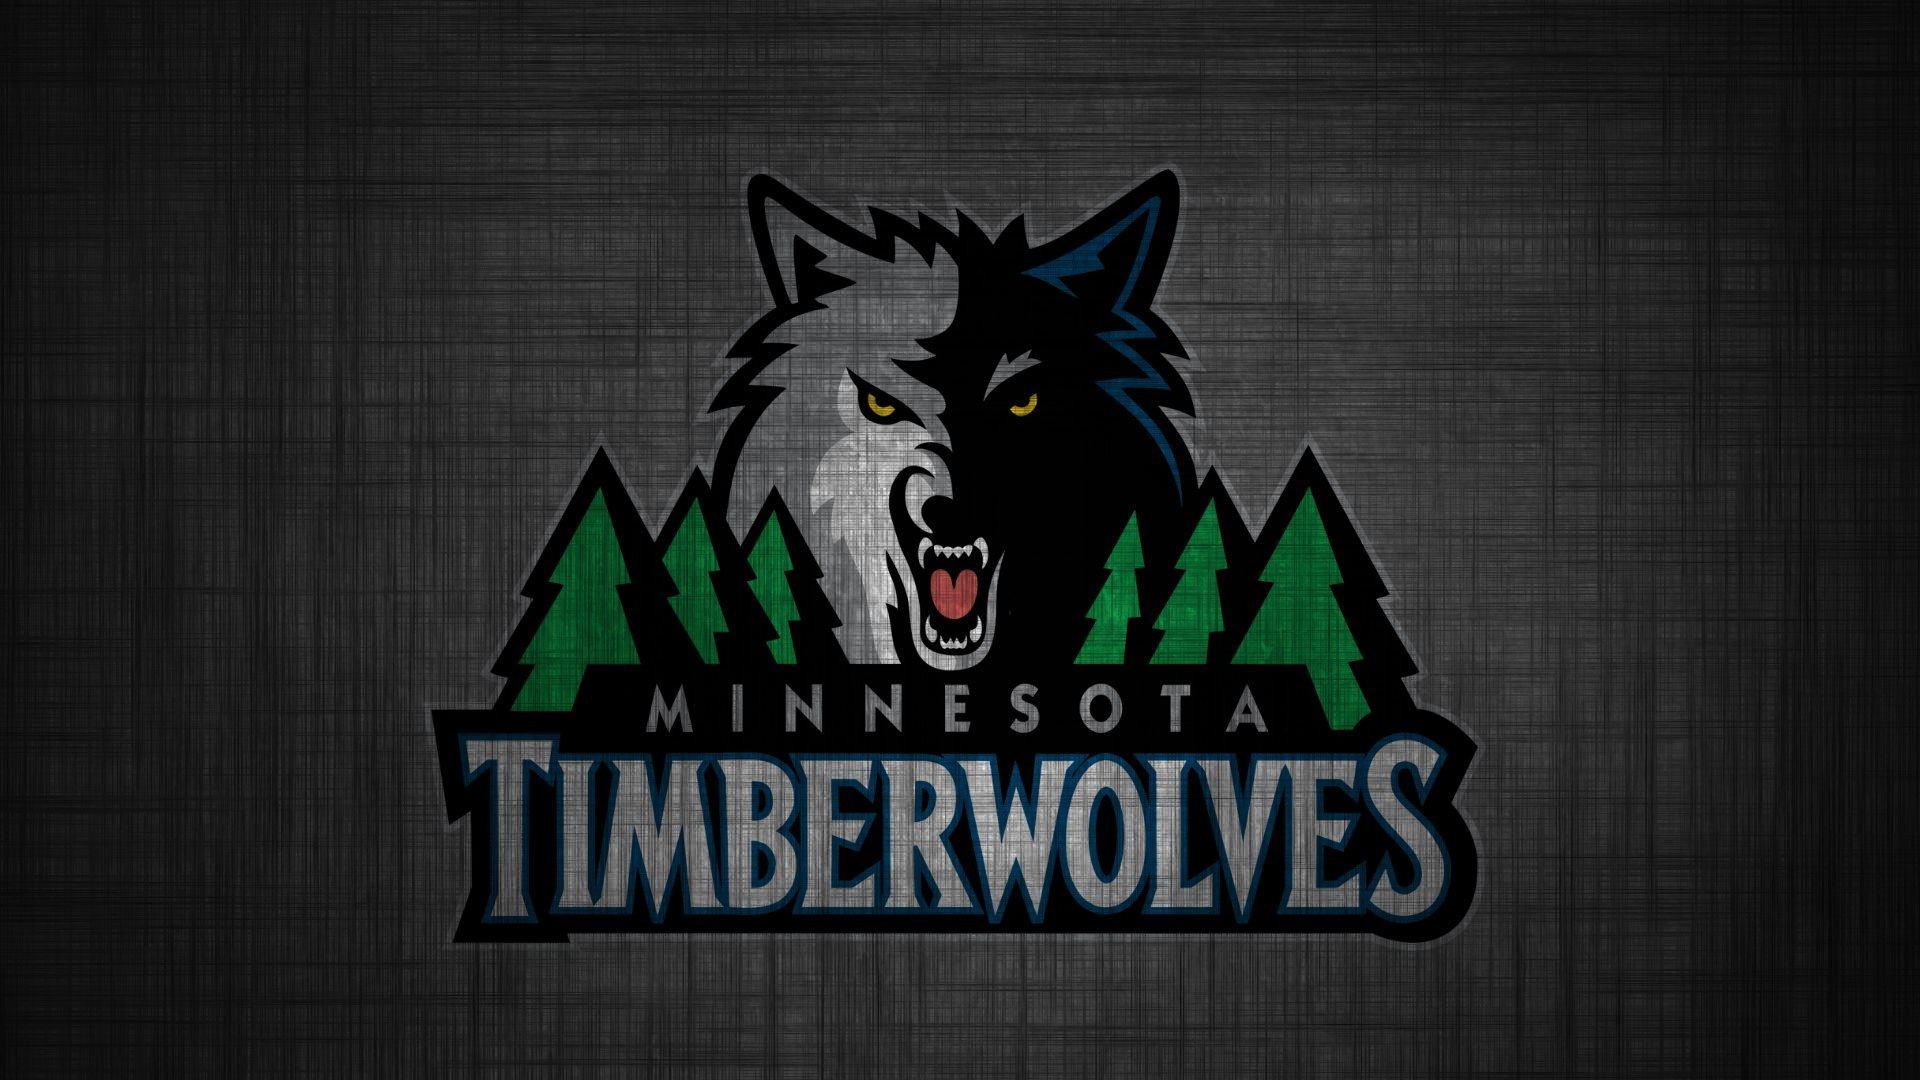 Minnesota Timberwolves wallpaper HD free download. Download